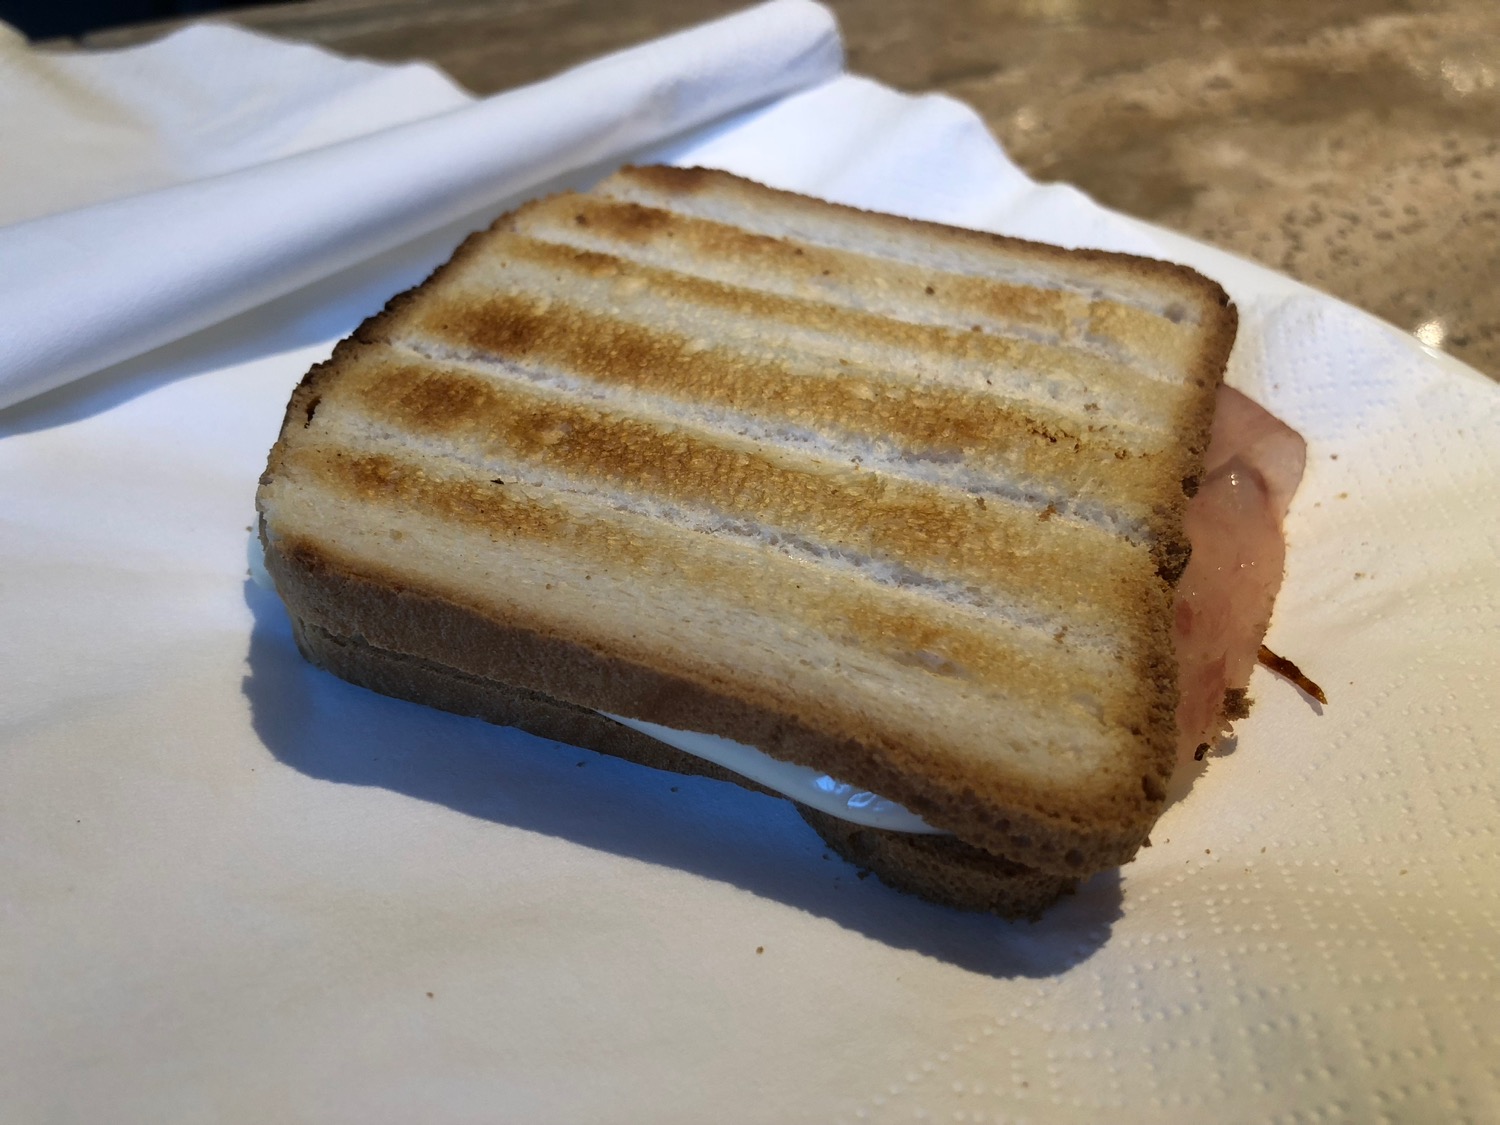 a sandwich on a napkin